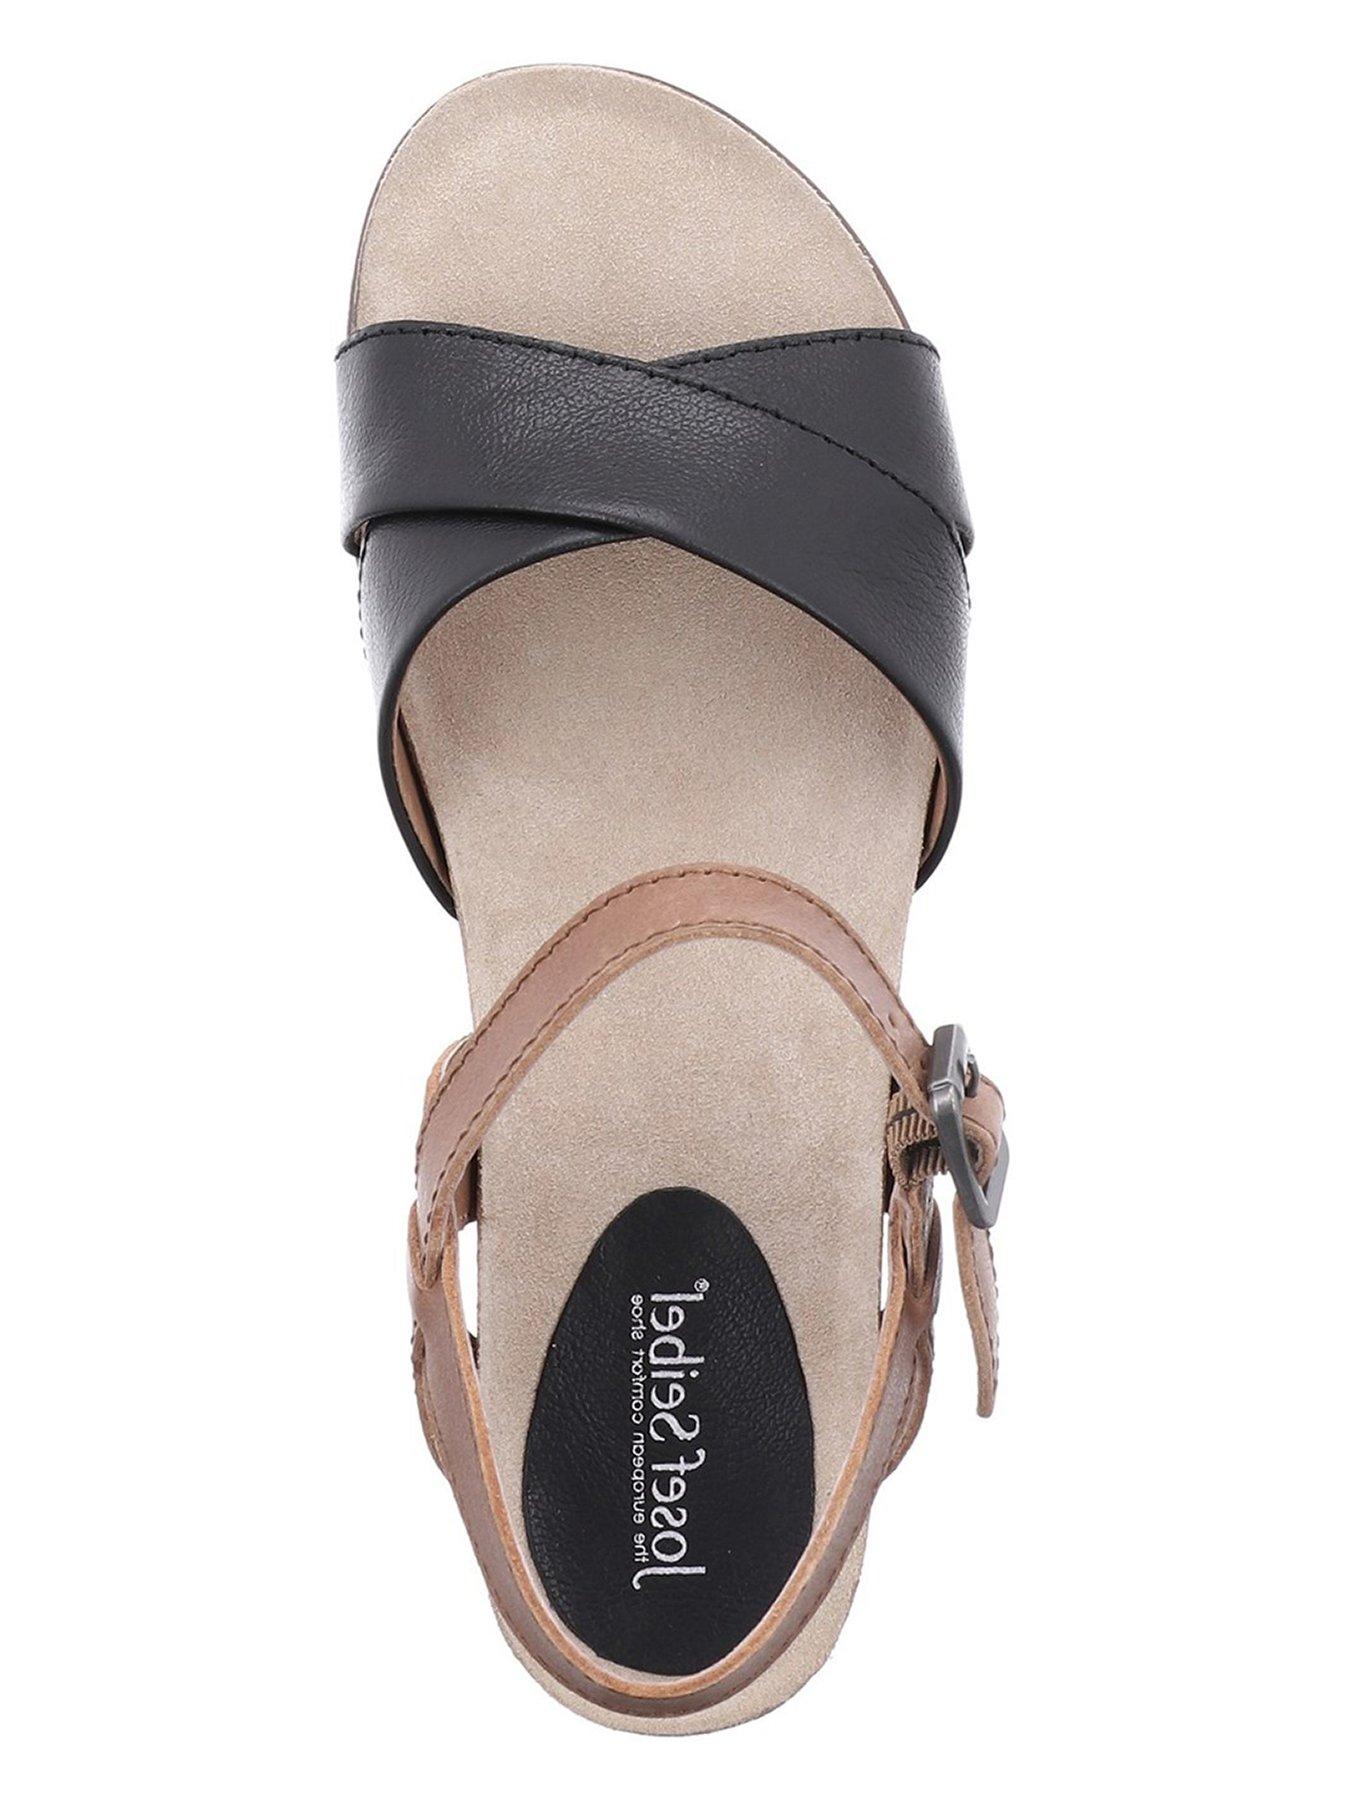  Clea Wedge Sandals - Tan/Black